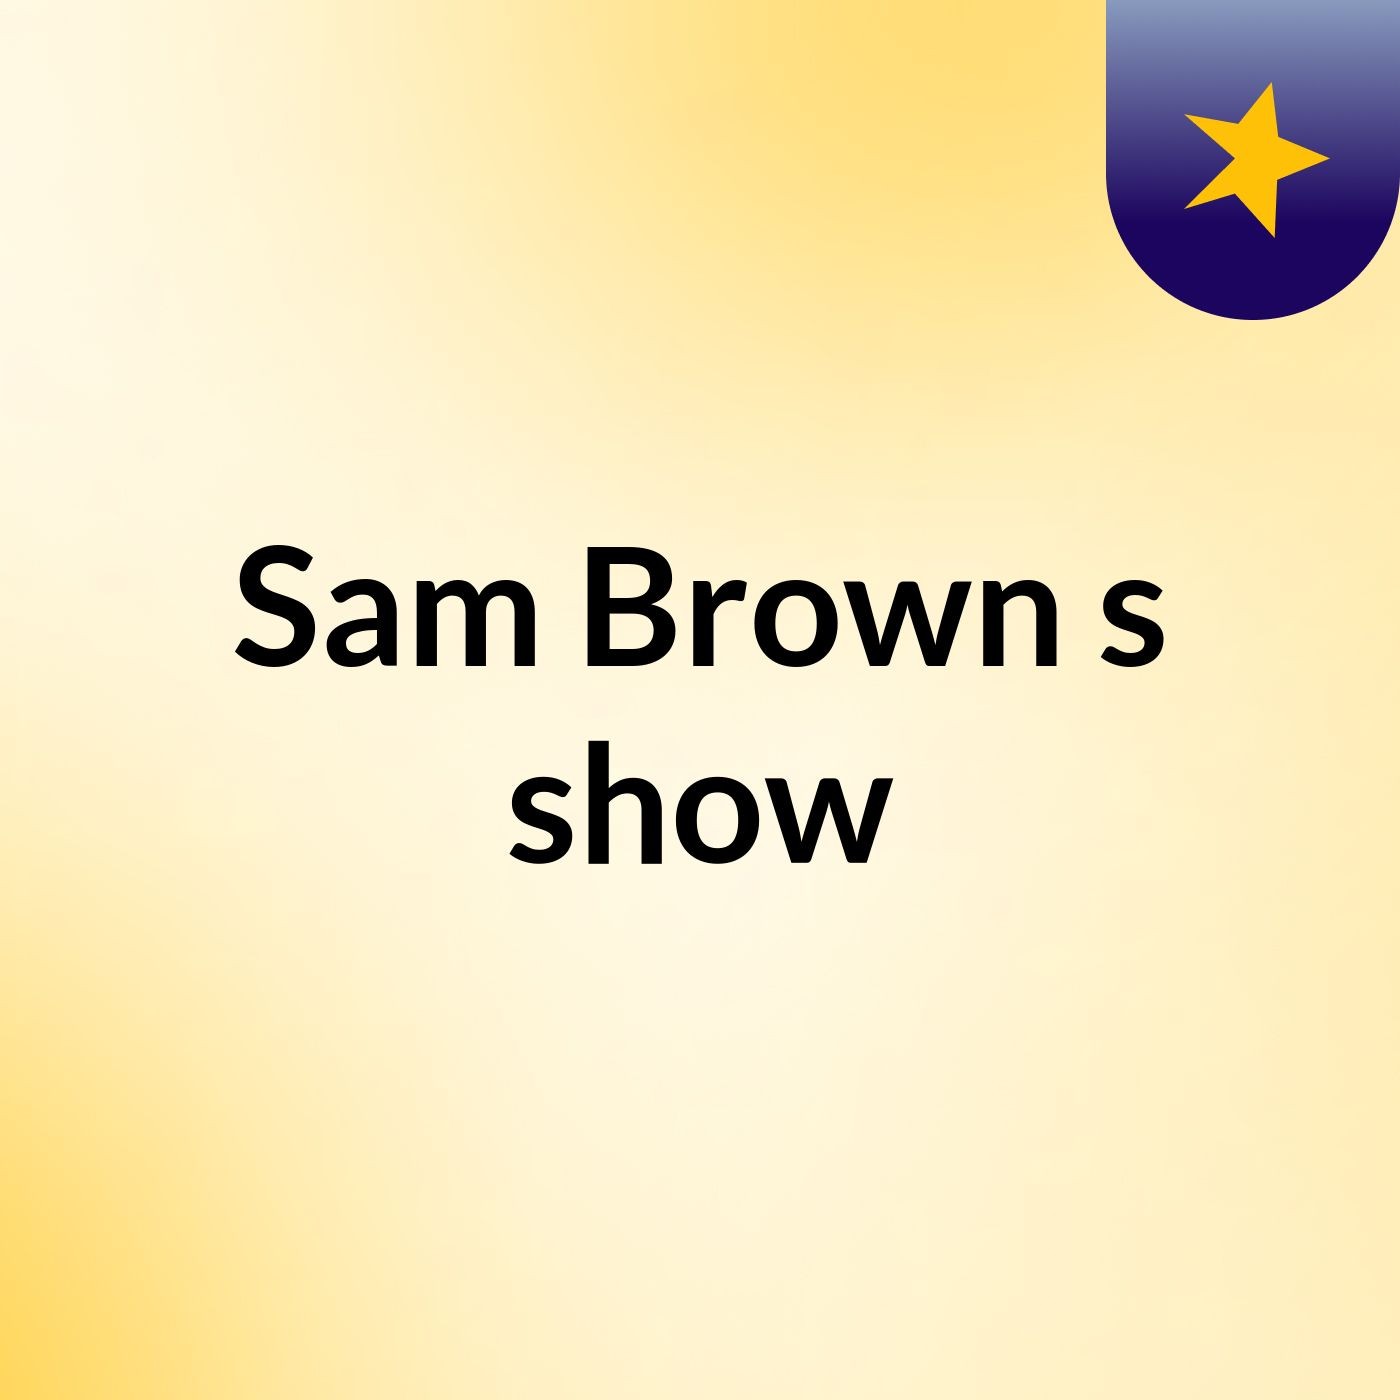 Sam Brown's show